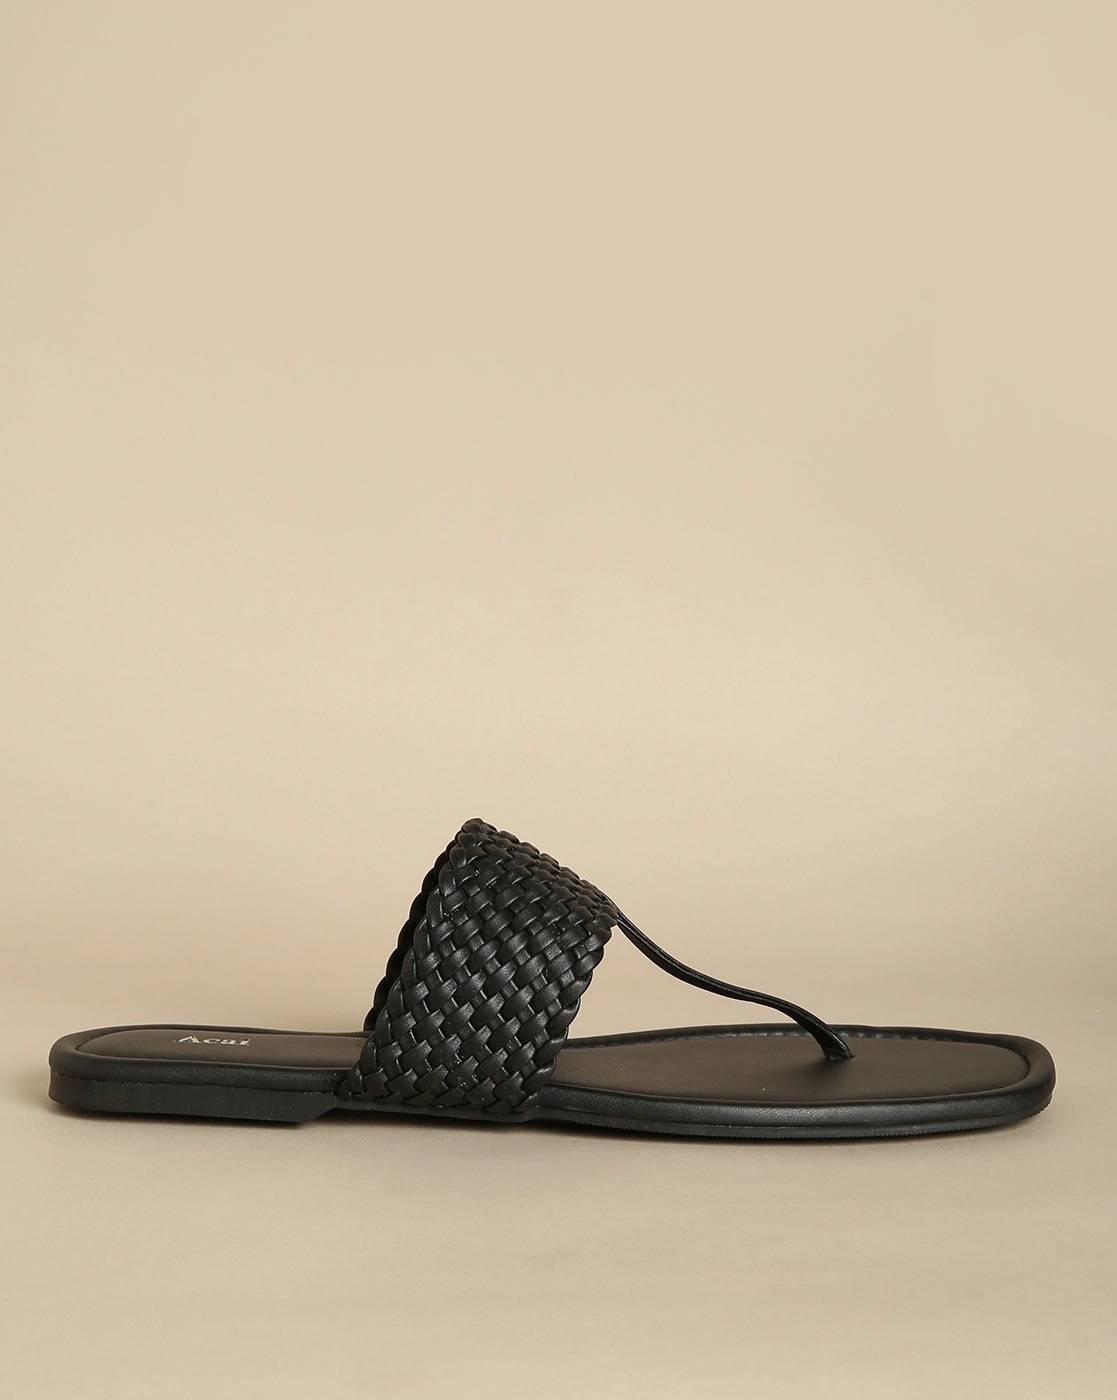 Trendy Slides - Woven Slides - Black Sandals - Vegan Sandals - Lulus